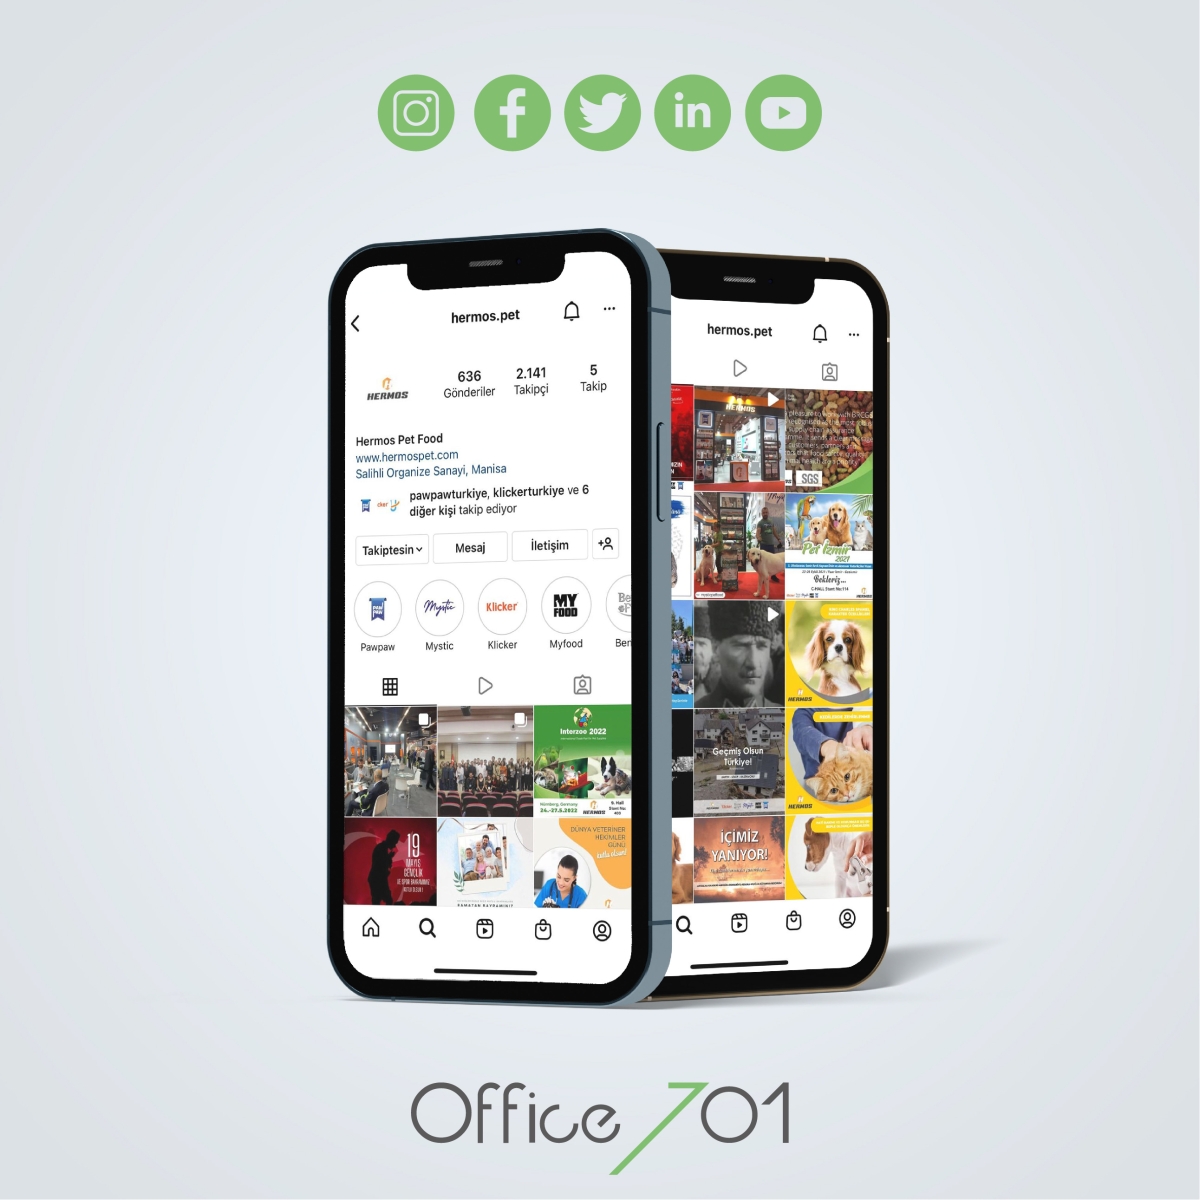 Office701 | Hermospet Sosyal Medya Yönetimi